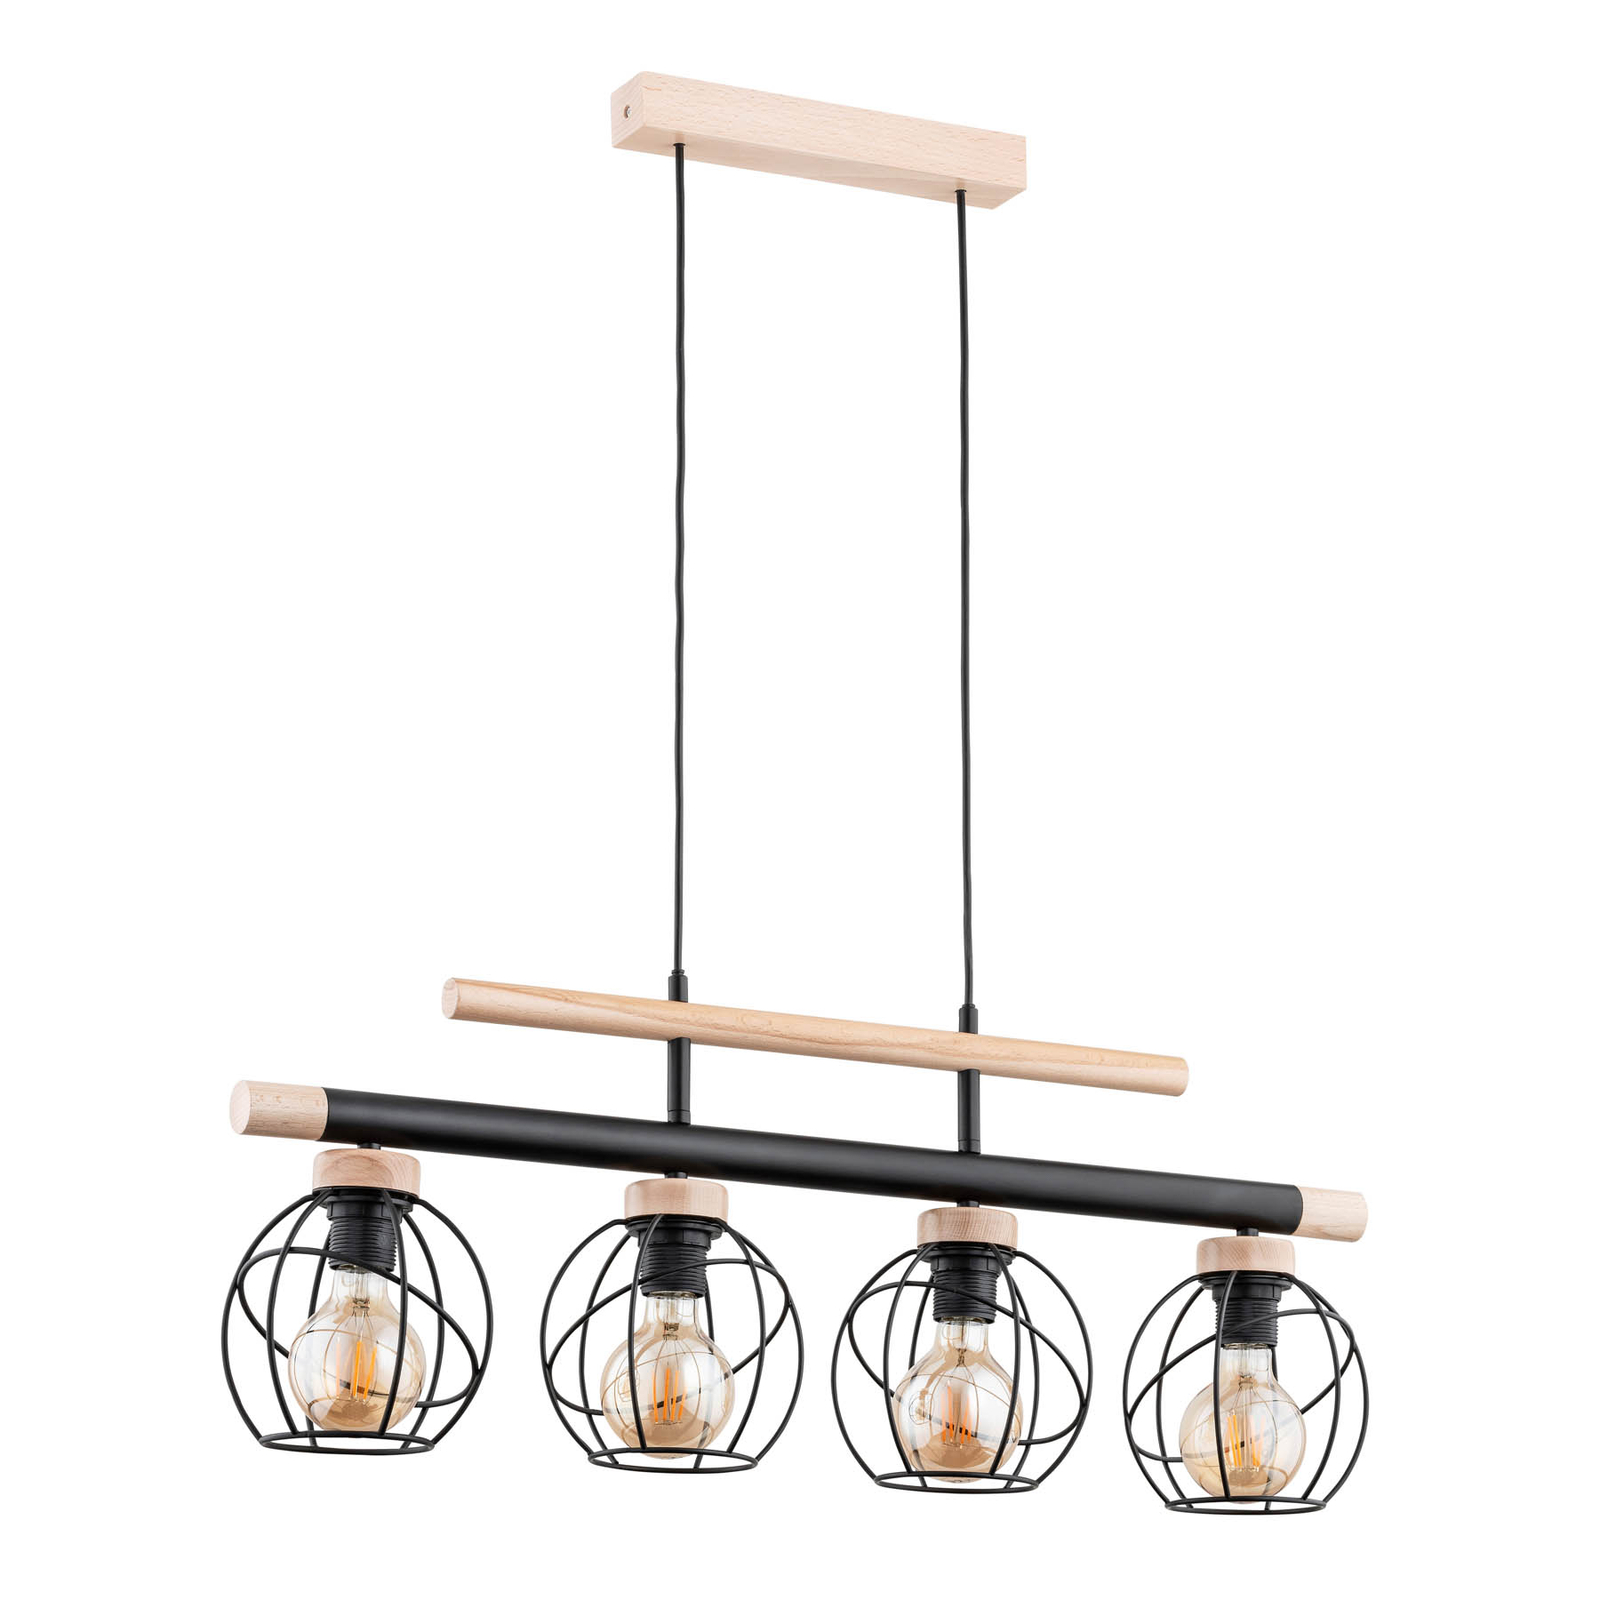 Trendy Basket pendant light made of wood, 4-bulb